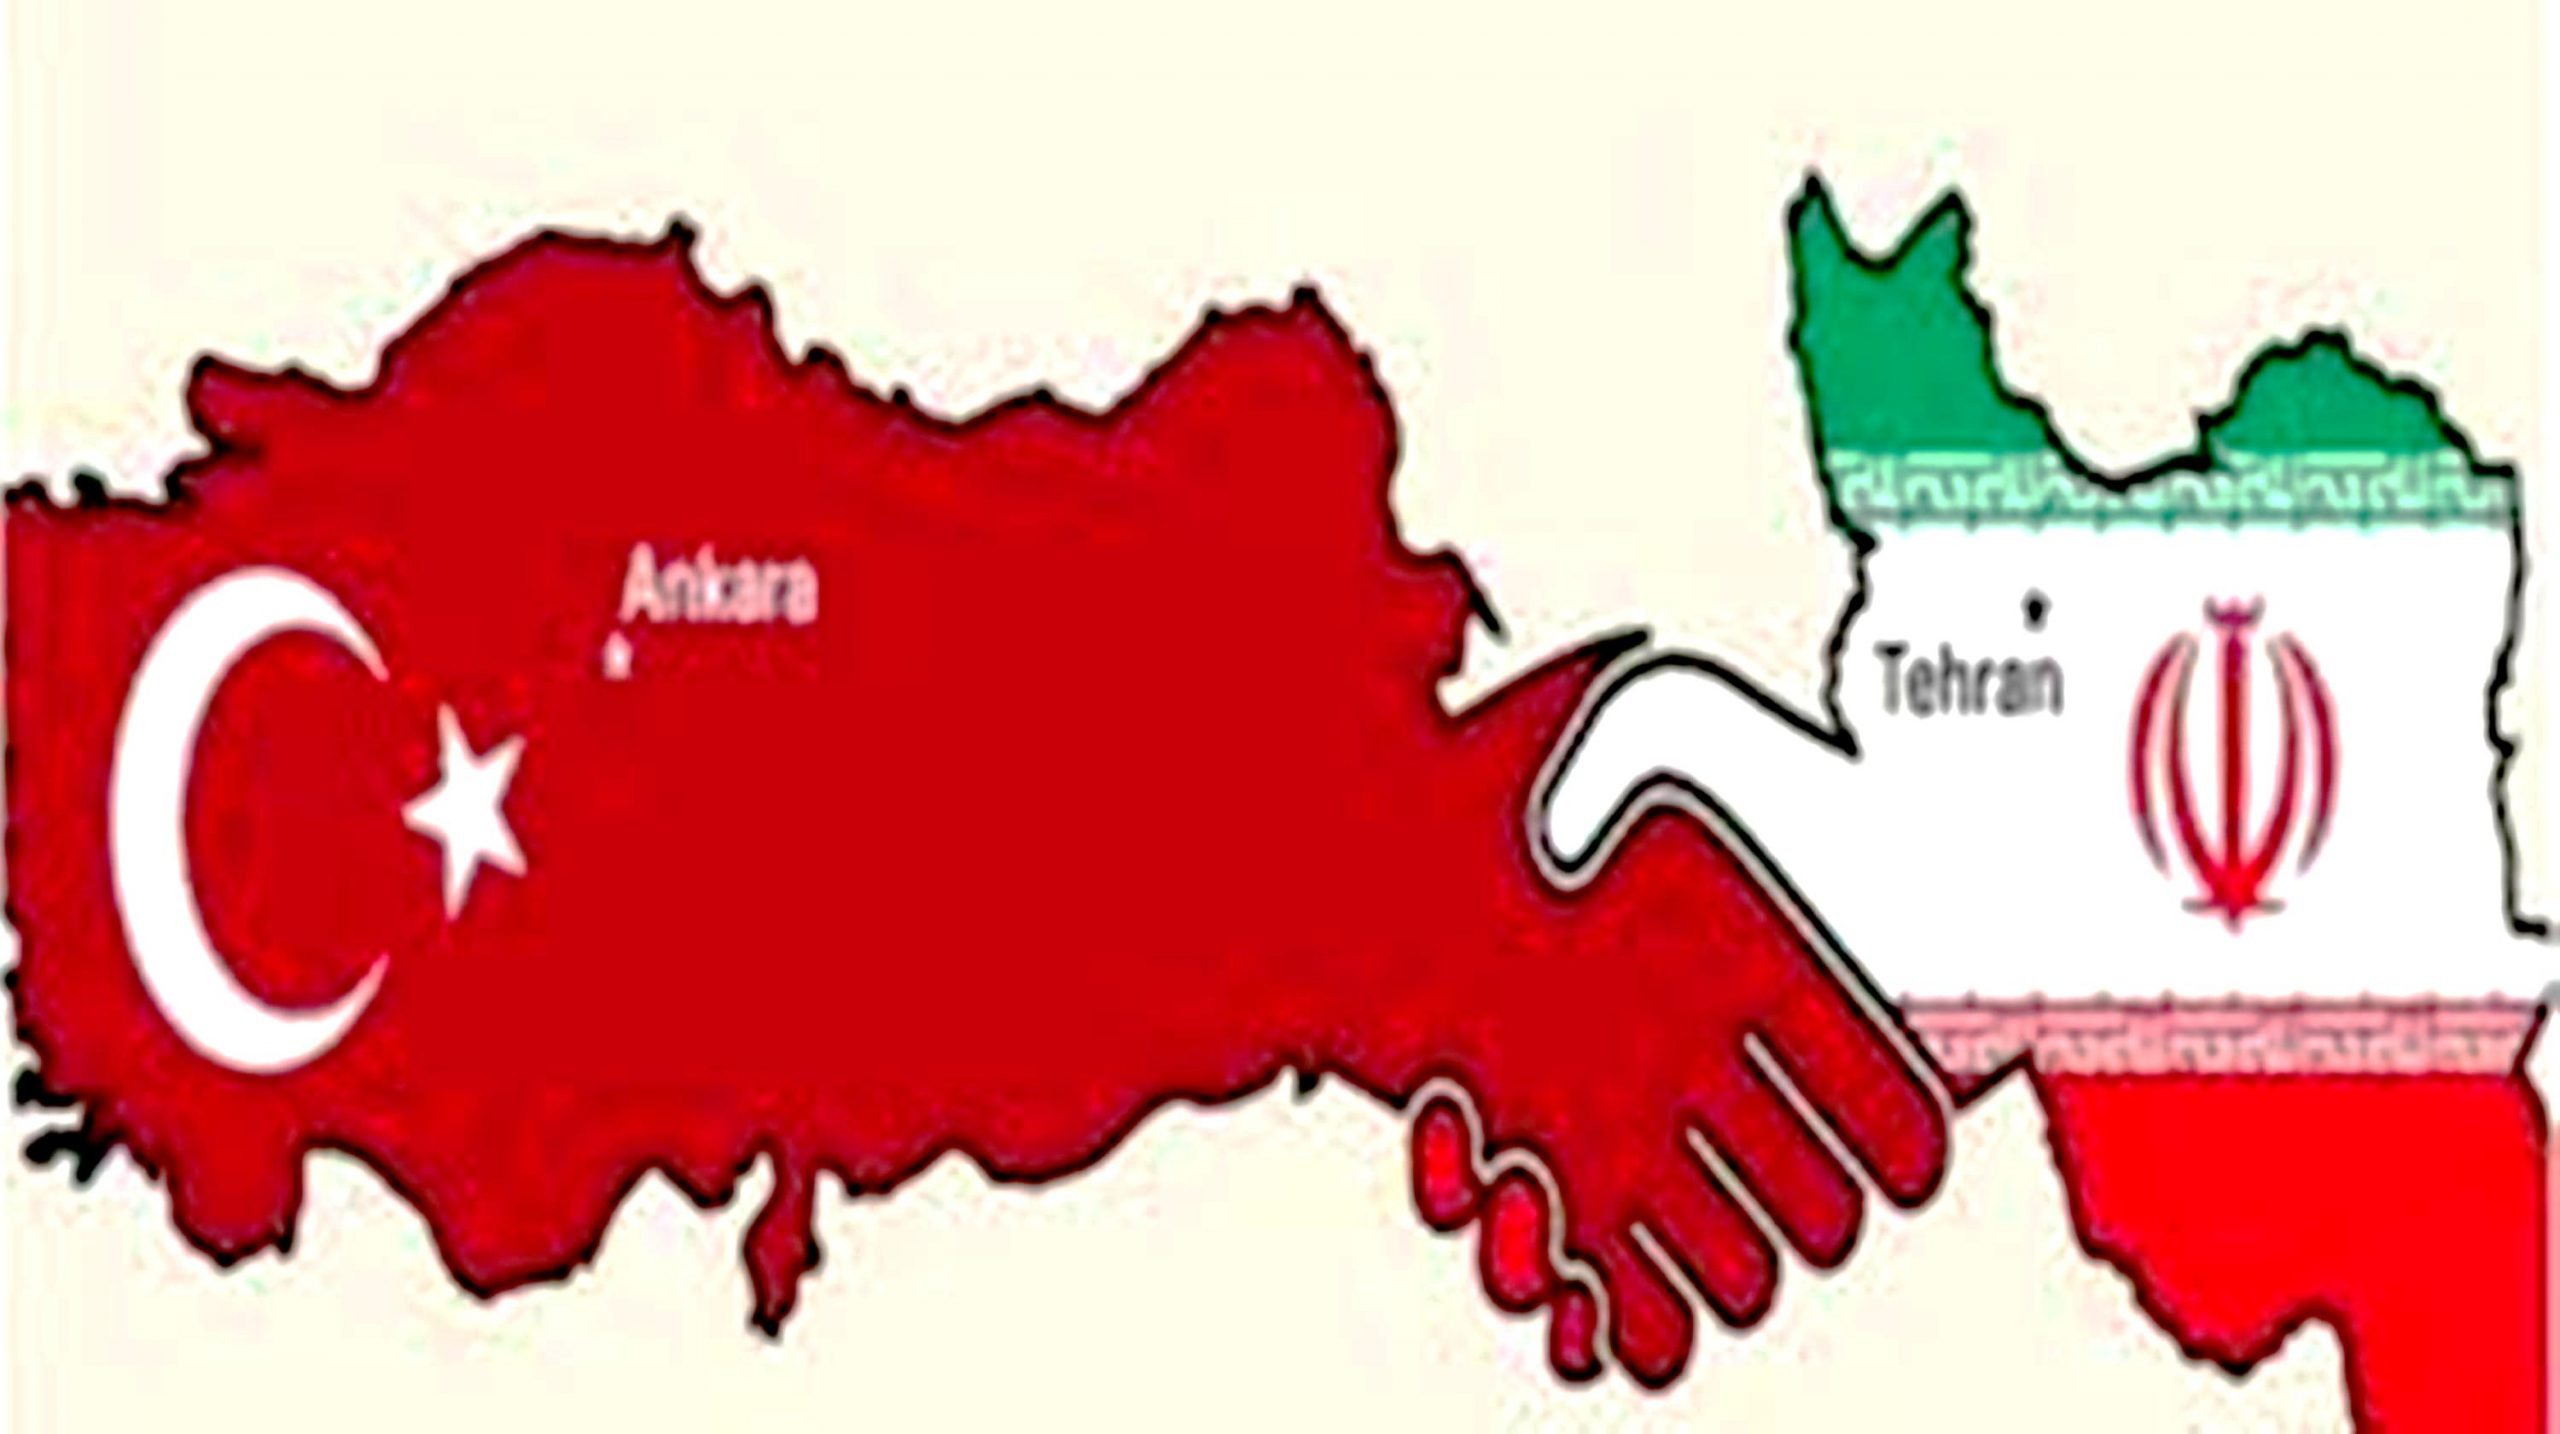 H συνεργασία μεταξύ Άγκυρας και Τεχεράνης επεκτείνεται και στον τομέα των Μυστικών Υπηρεσιών